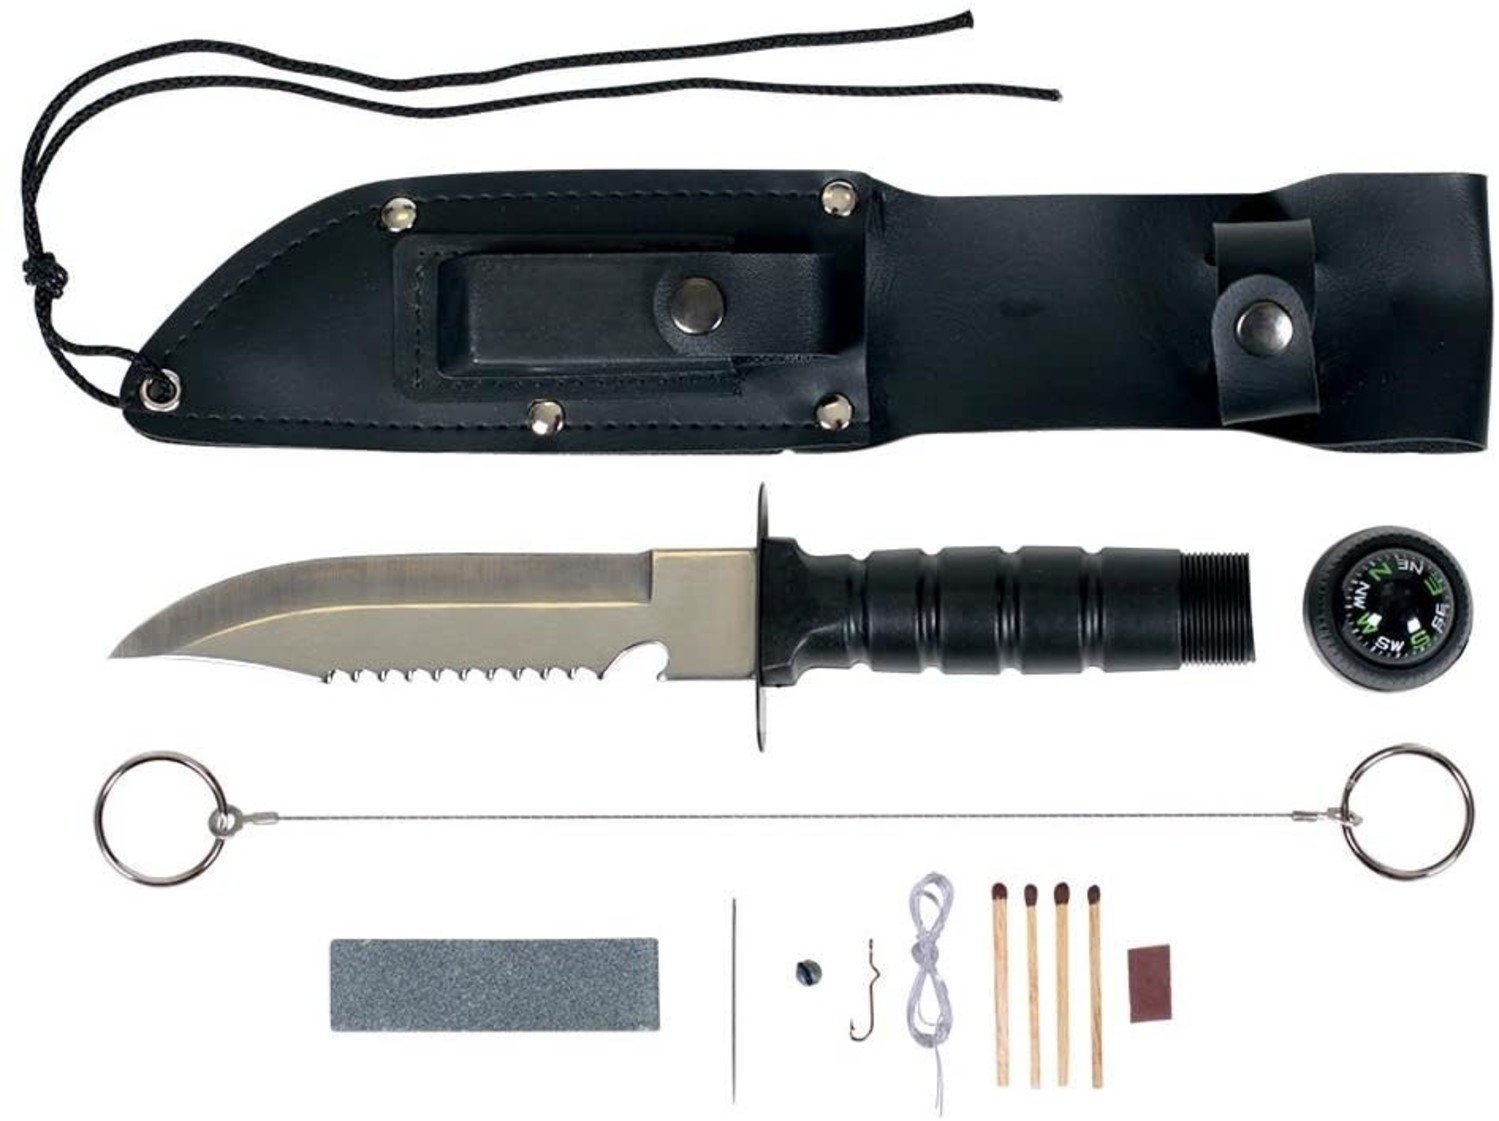 https://cdn.shoplightspeed.com/shops/649119/files/41317917/1500x4000x3/stansport-stansport-6-survival-knife-kit-with-shea.jpg